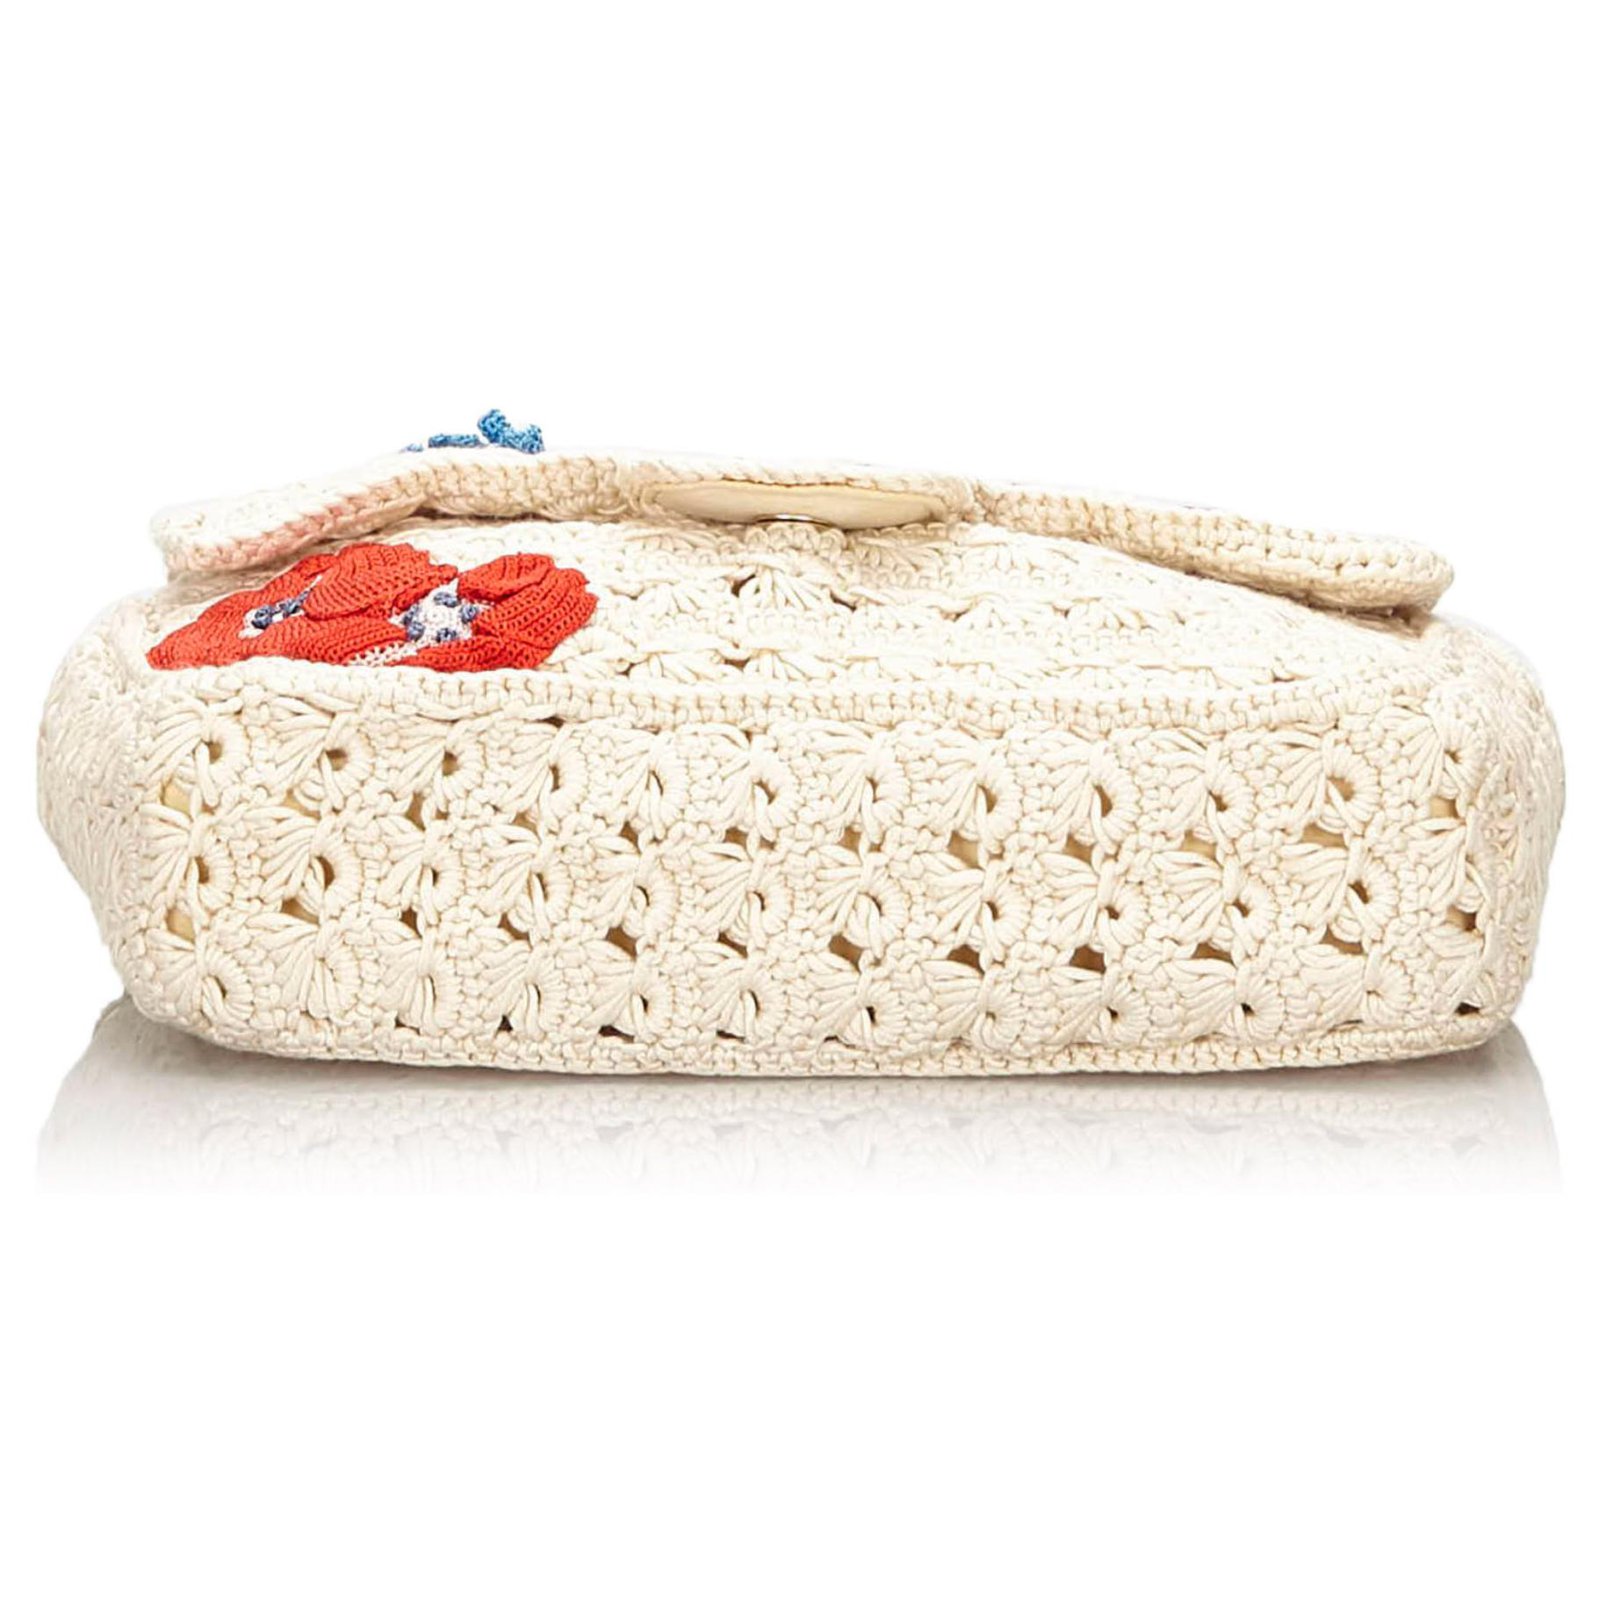 CHANEL Crochet Camellia Small Flap 88857